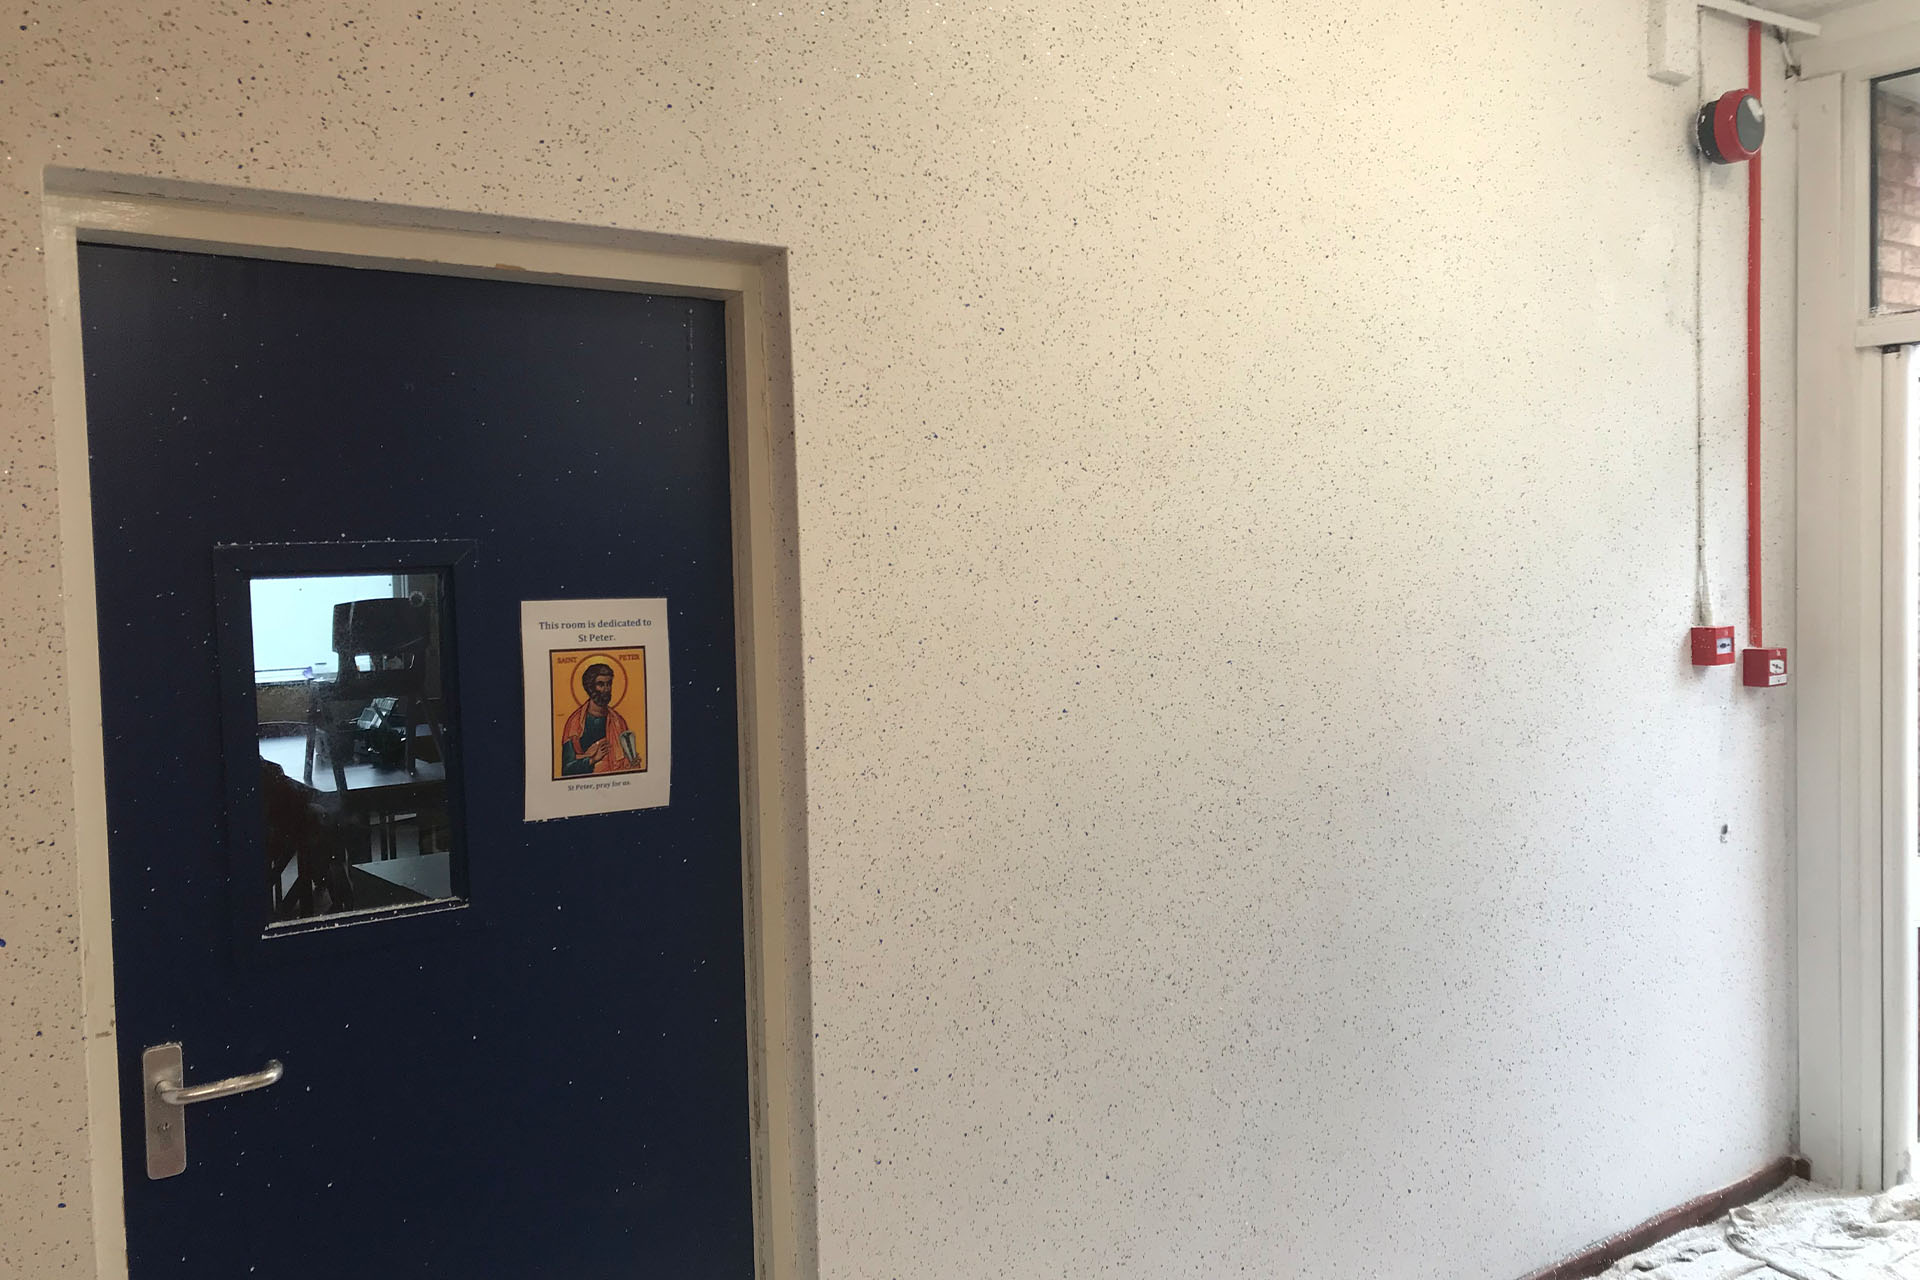 Birmingham School Reception Area Transformed Using Ilumitex® Bespoke